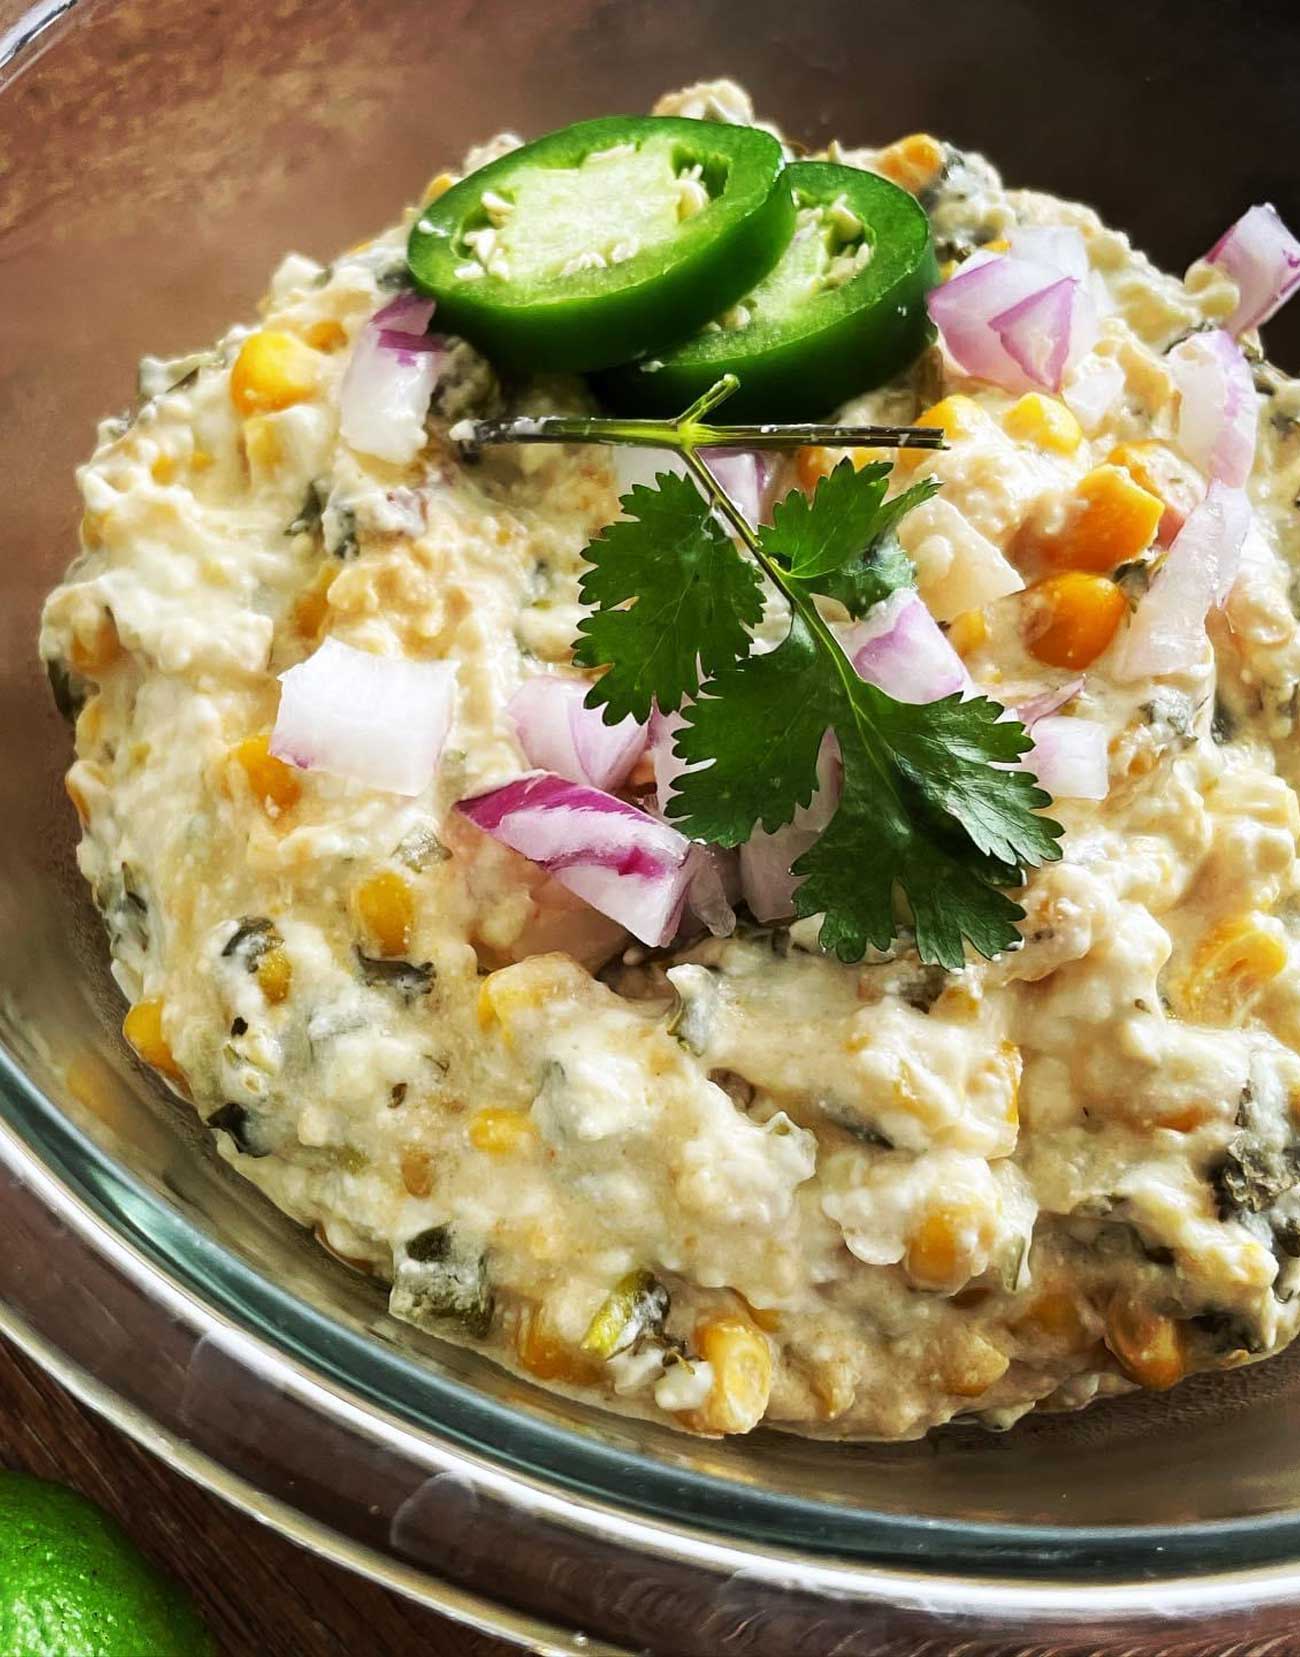 Mexican street corn dip recipe in a crockpot